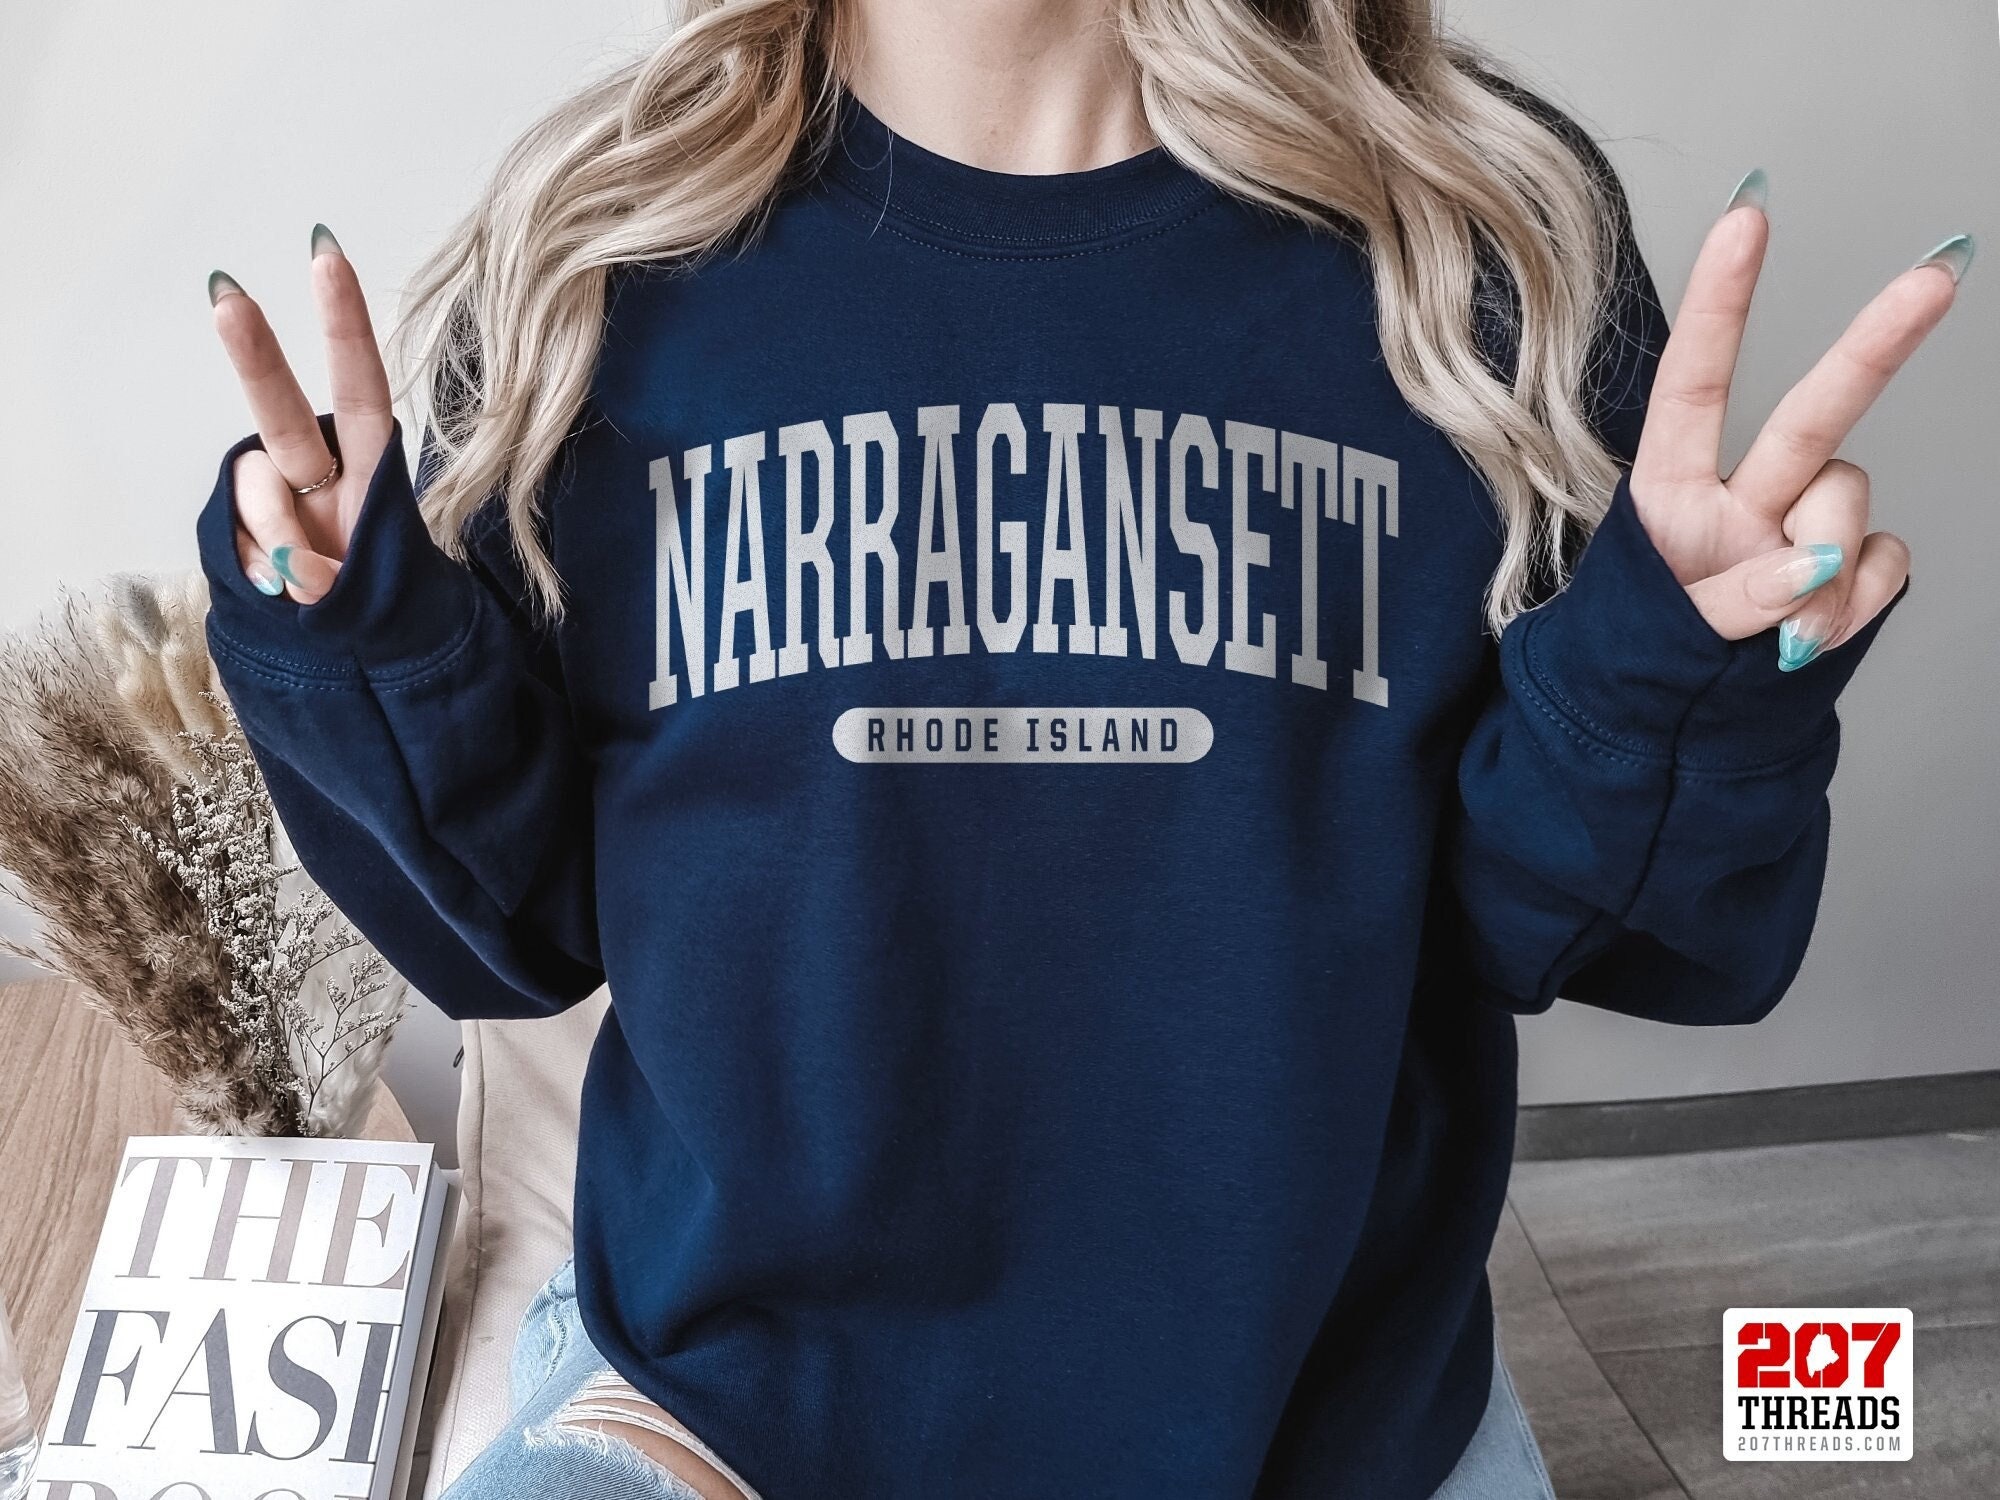  Narragansett Jerseys w/Shoulder Crests - We are Ready